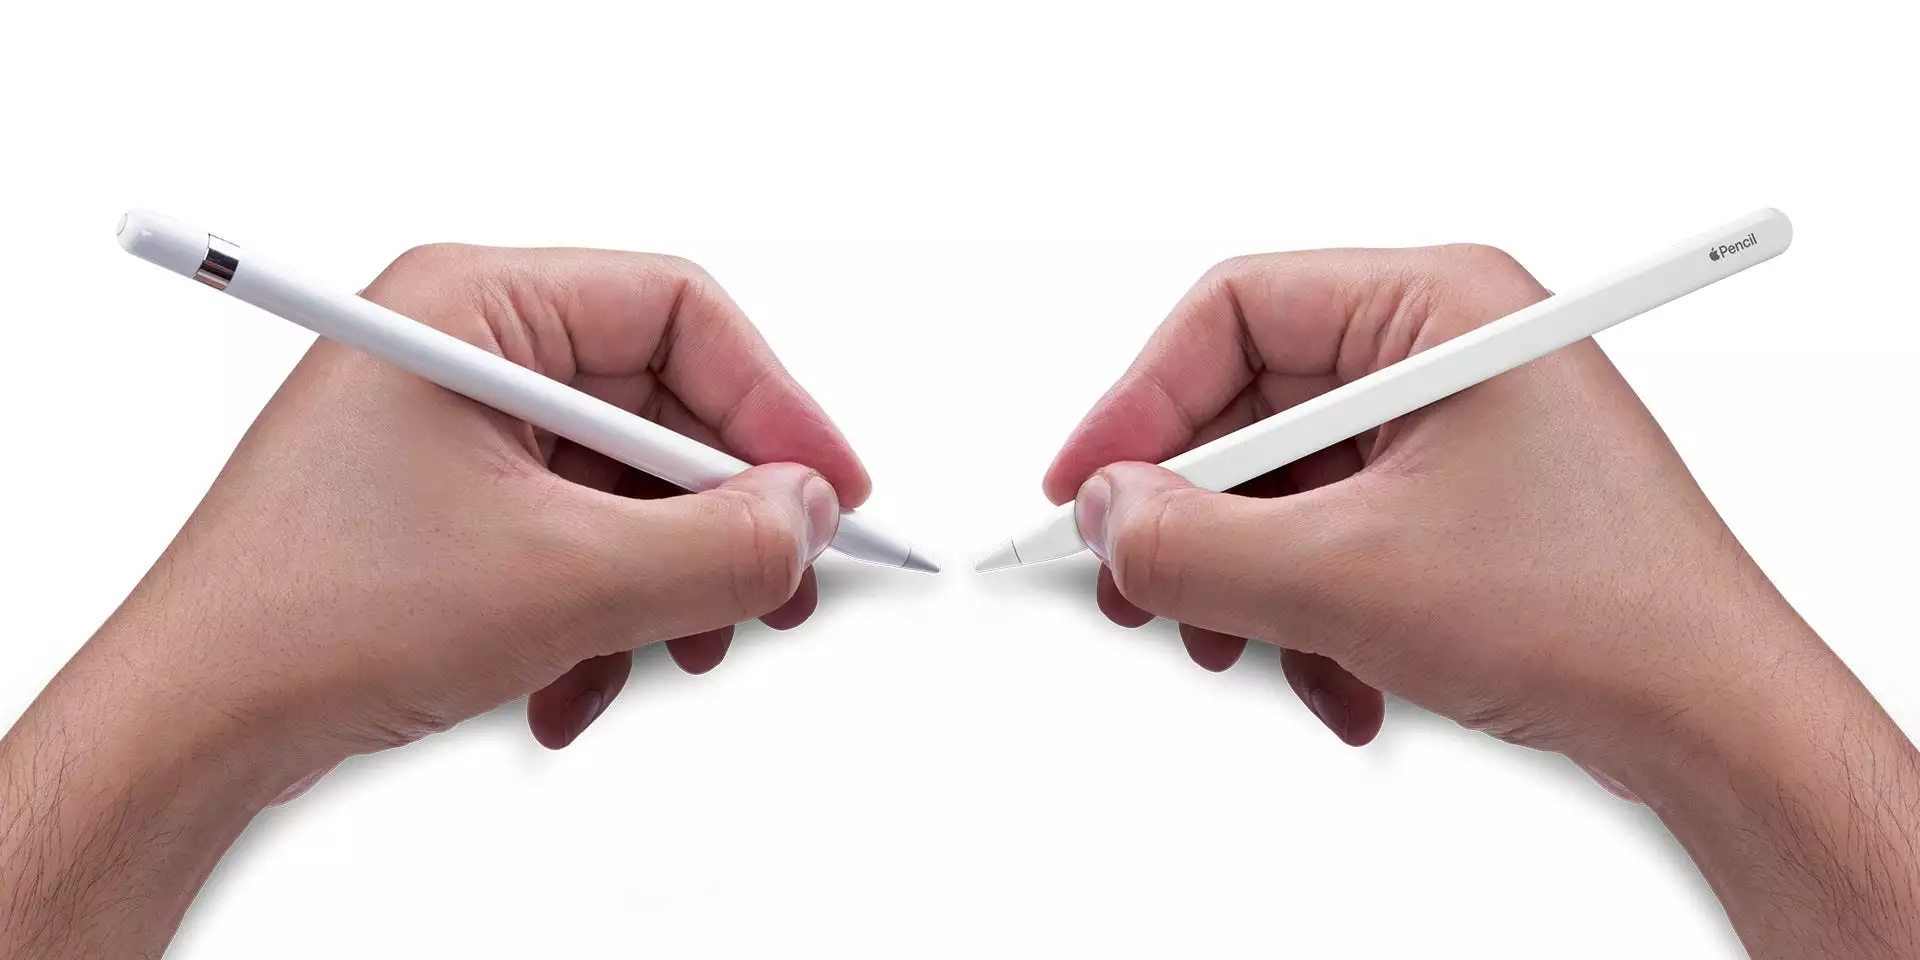 Apple Pencil 是 iPad 用户的最佳触控笔 - 这是获取和使用方法